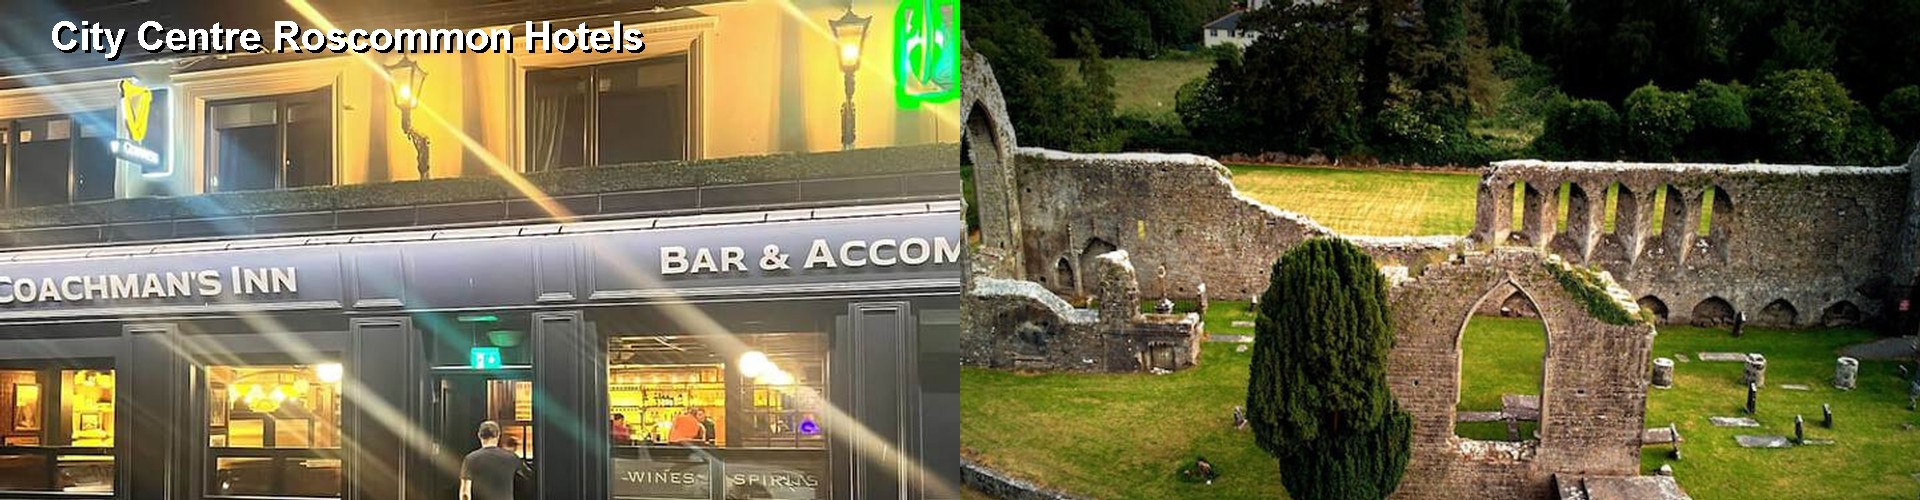 5 Best Hotels near City Centre Roscommon